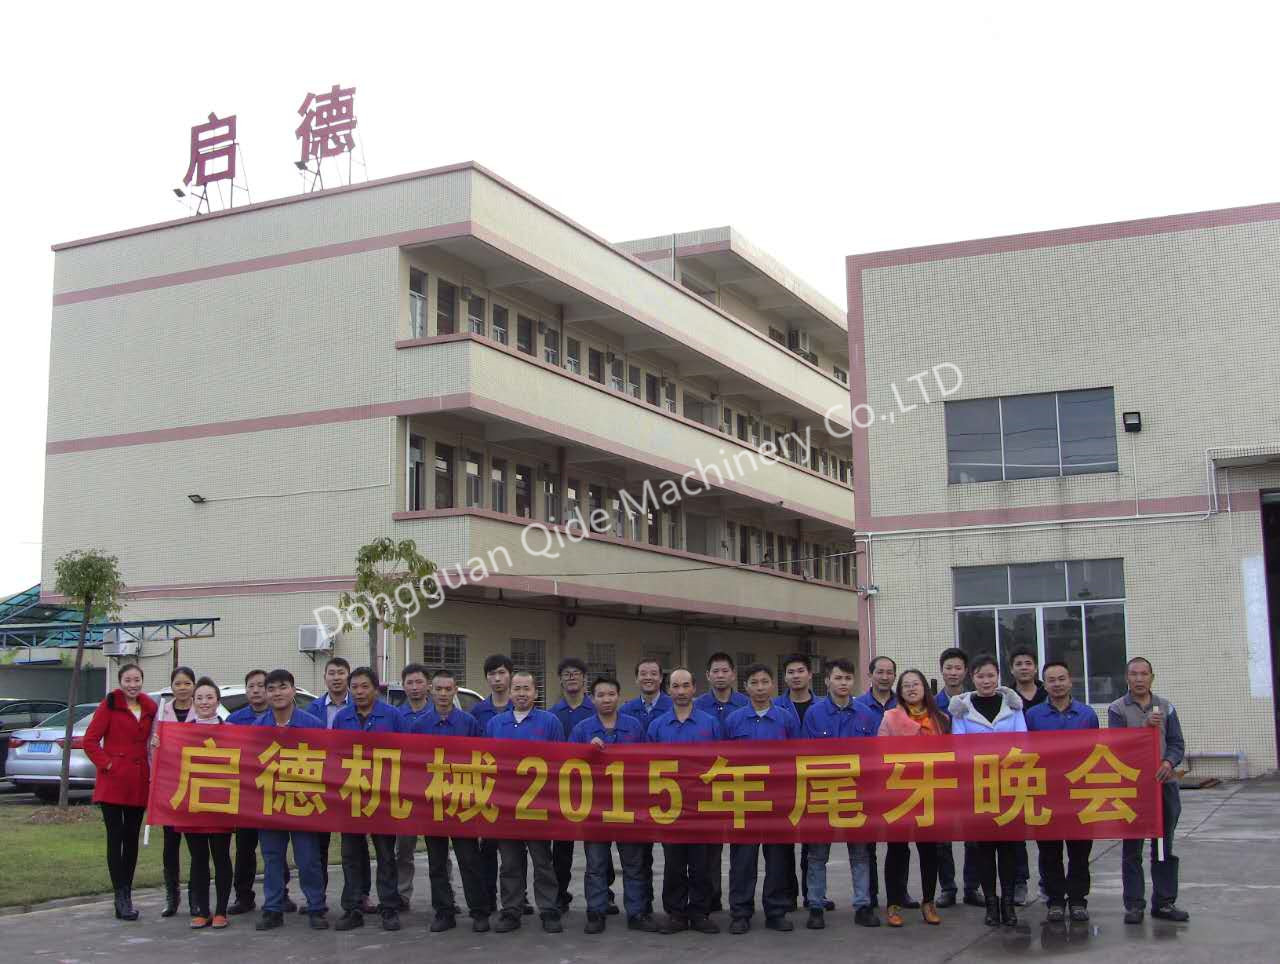 2015 Dongguan qide machinery team.jpg